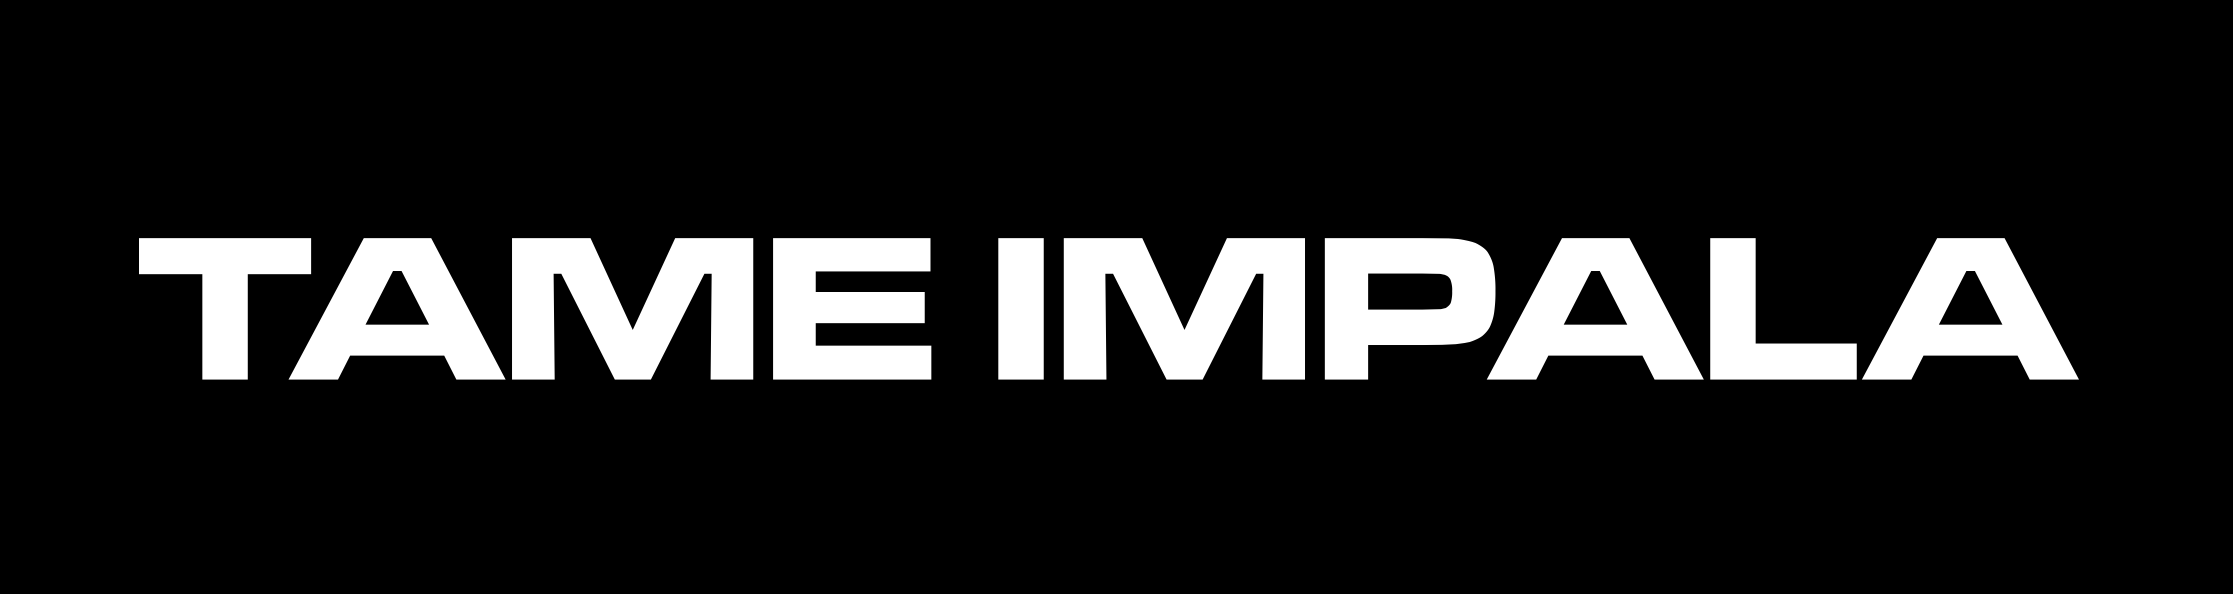 Tame Impala Logo - TAME IMPALA logo an adaptation of Eurostile Extendend ?